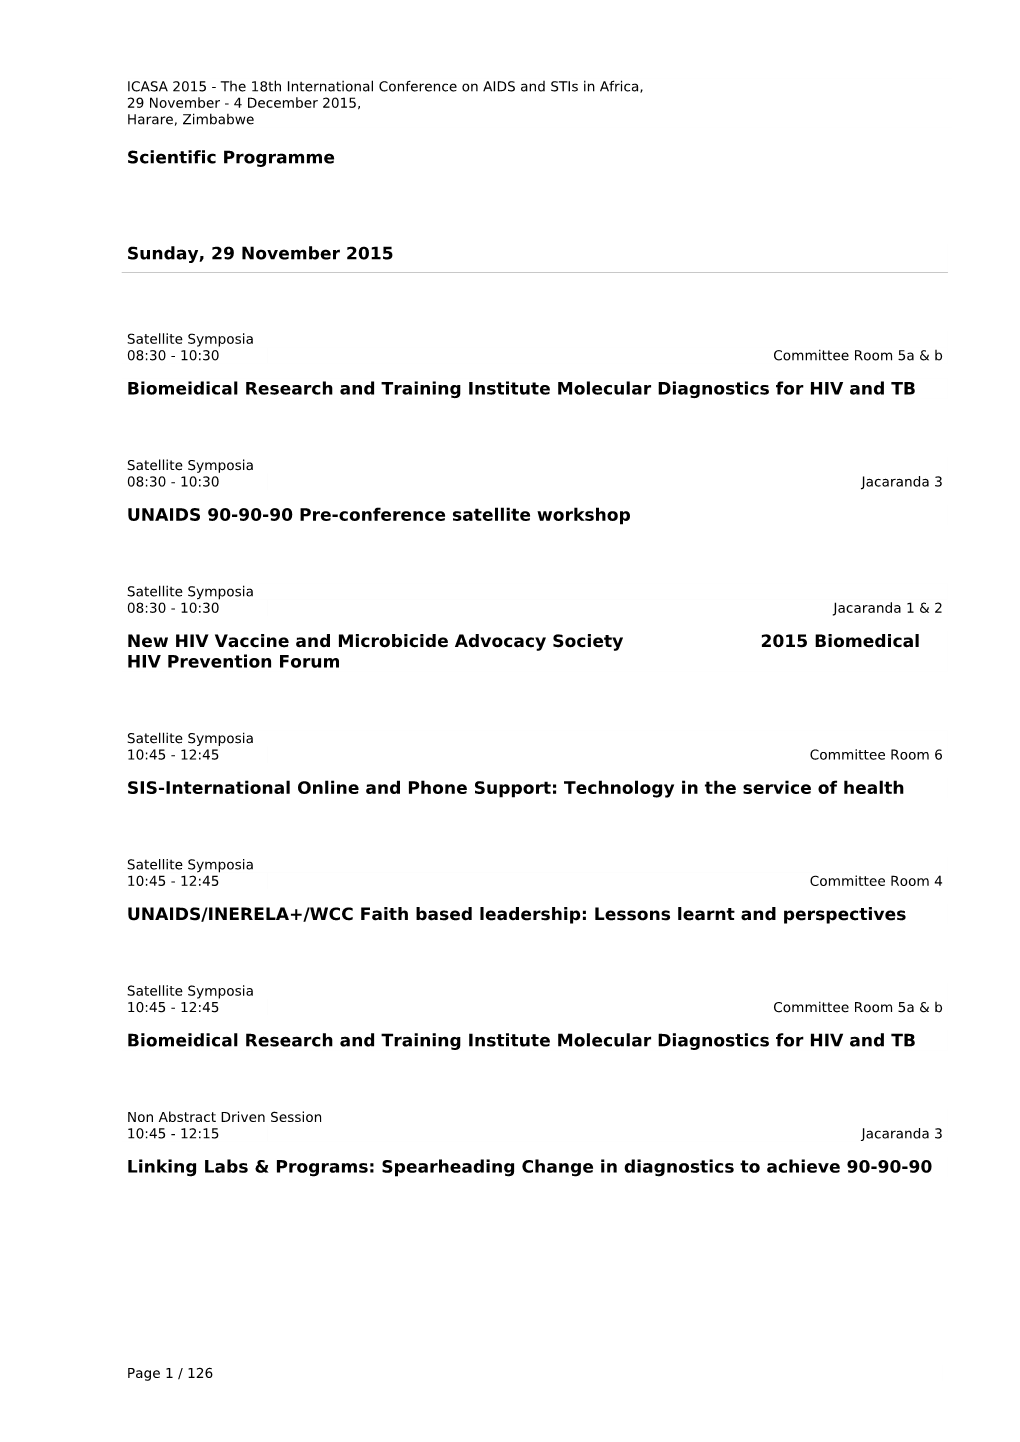 Scientific Programme Sunday, 29 November 2015 Biomeidical